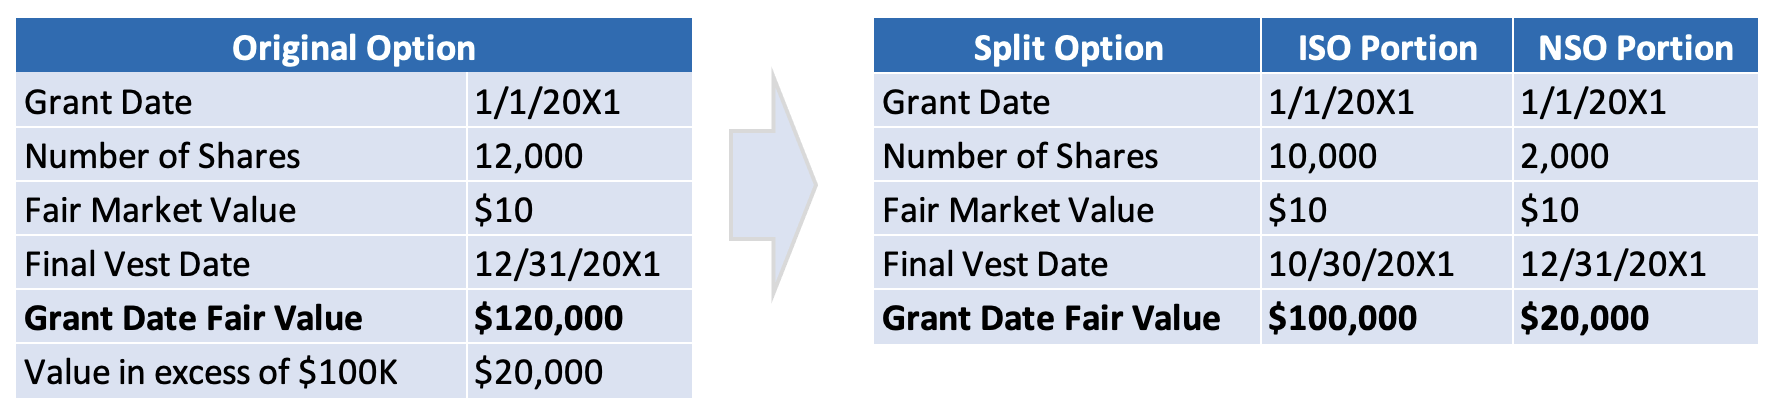 ISO Split Table 1